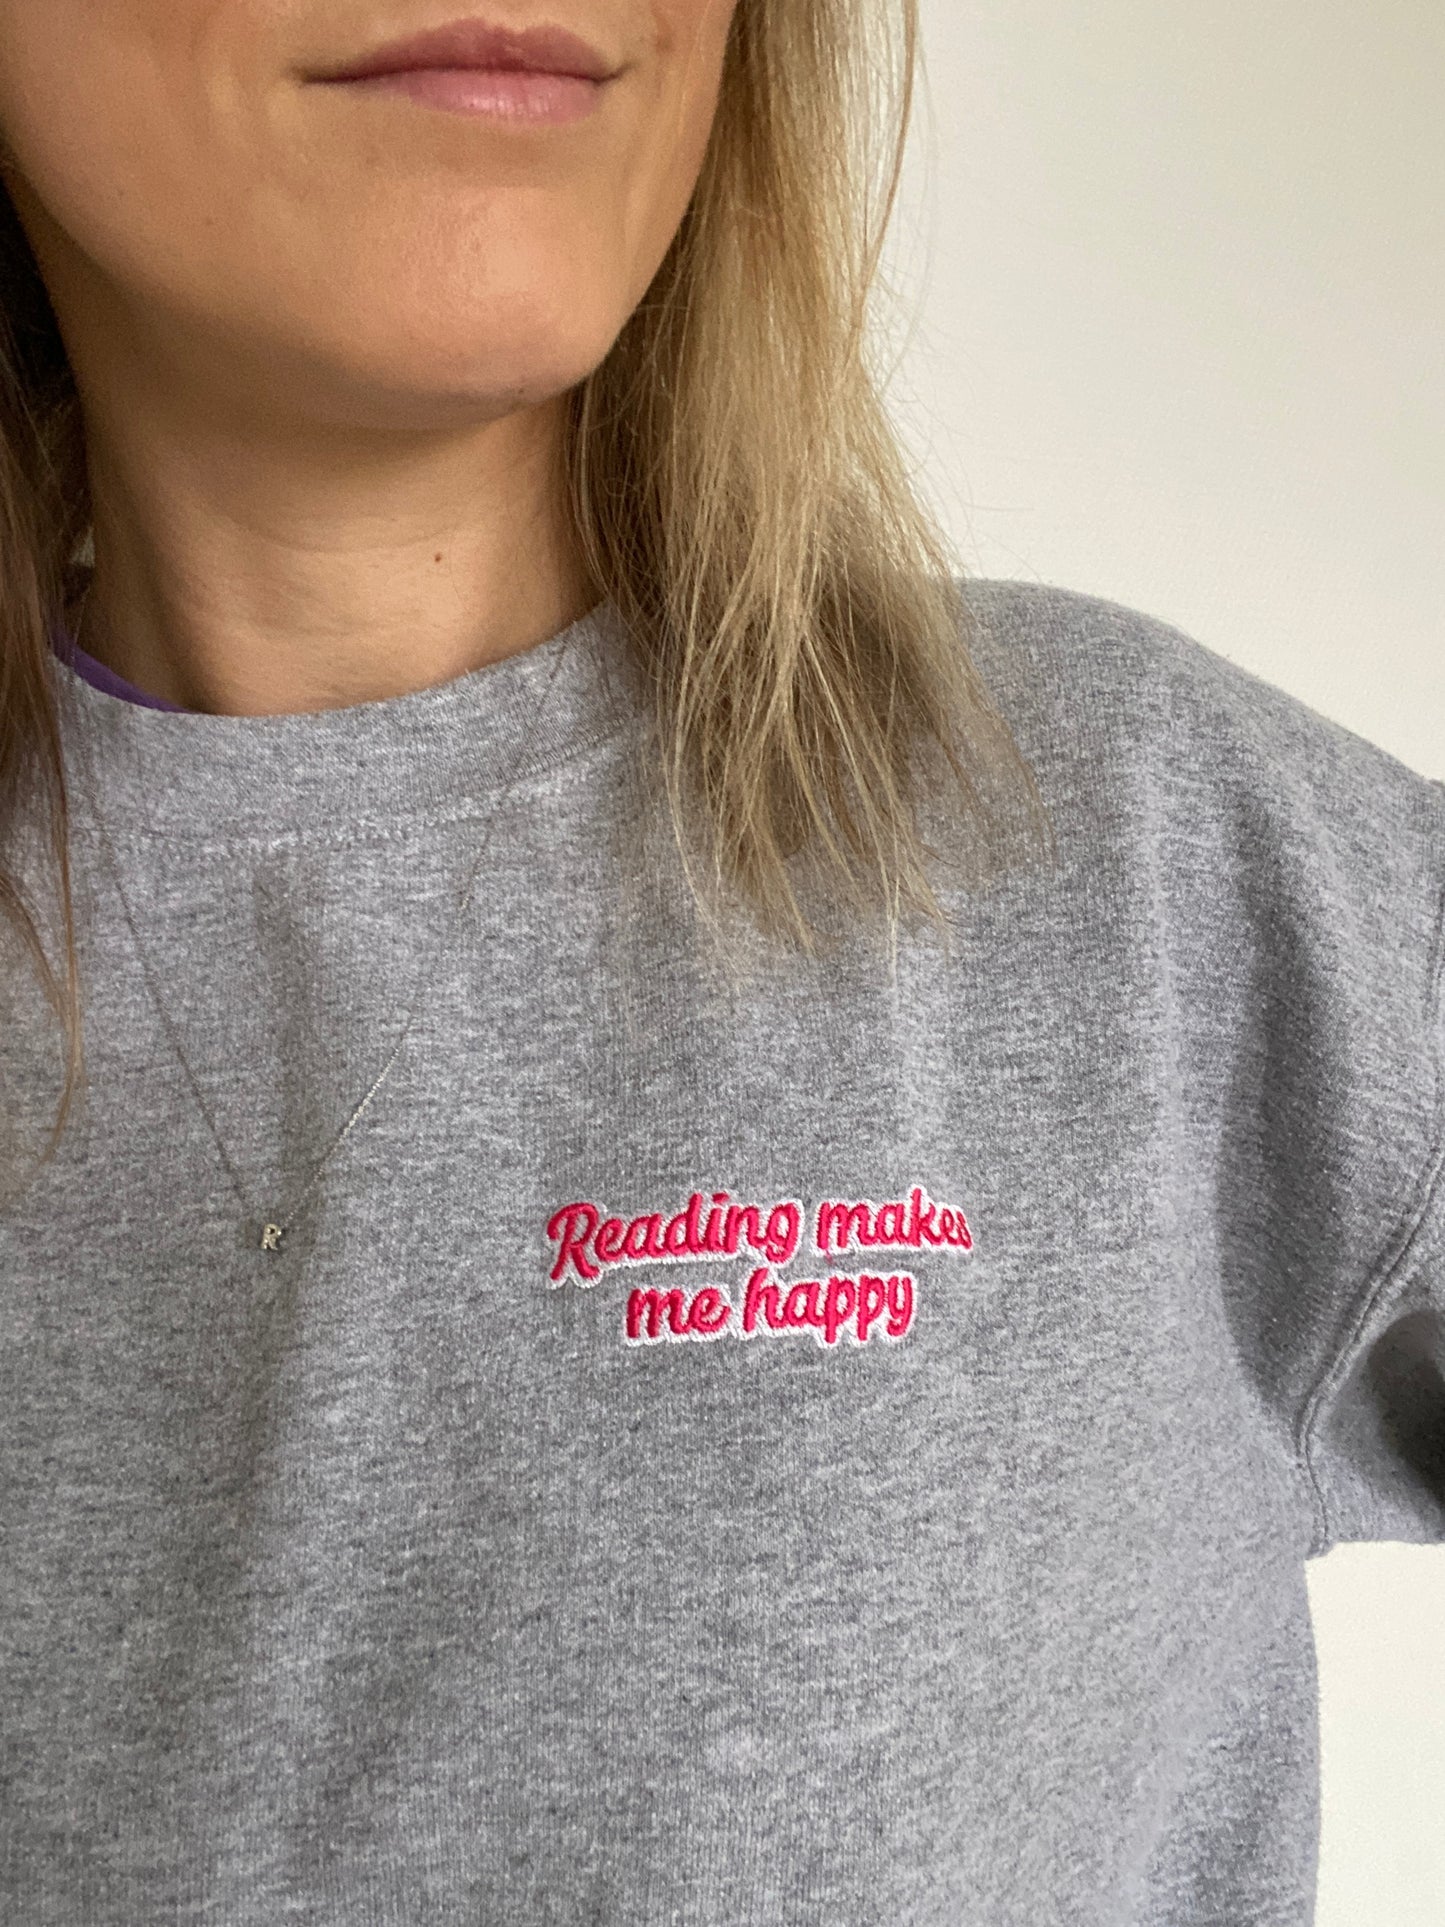 READING MAKES ME HAPPY - Embroidered Unisex Sweatshirt